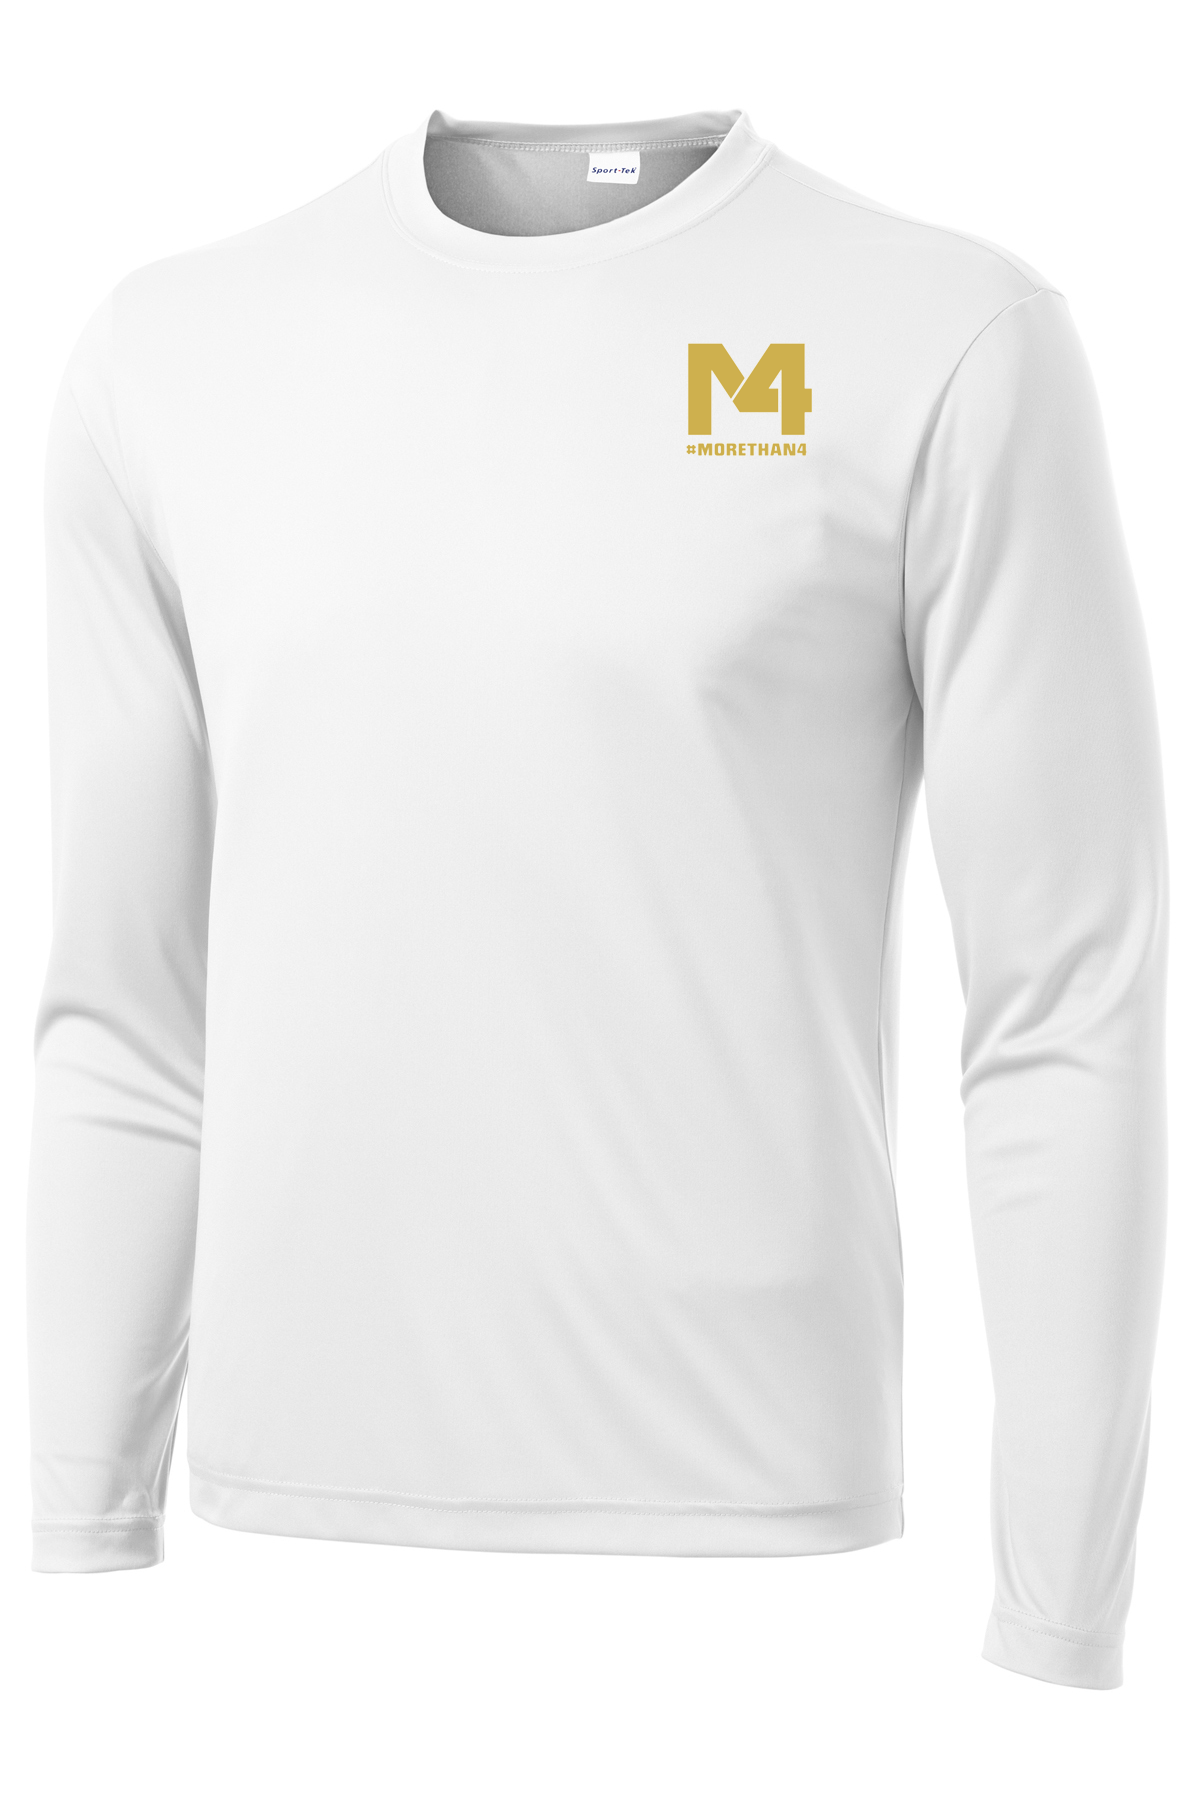 M4 Logo Long Sleeve Performance Shirt